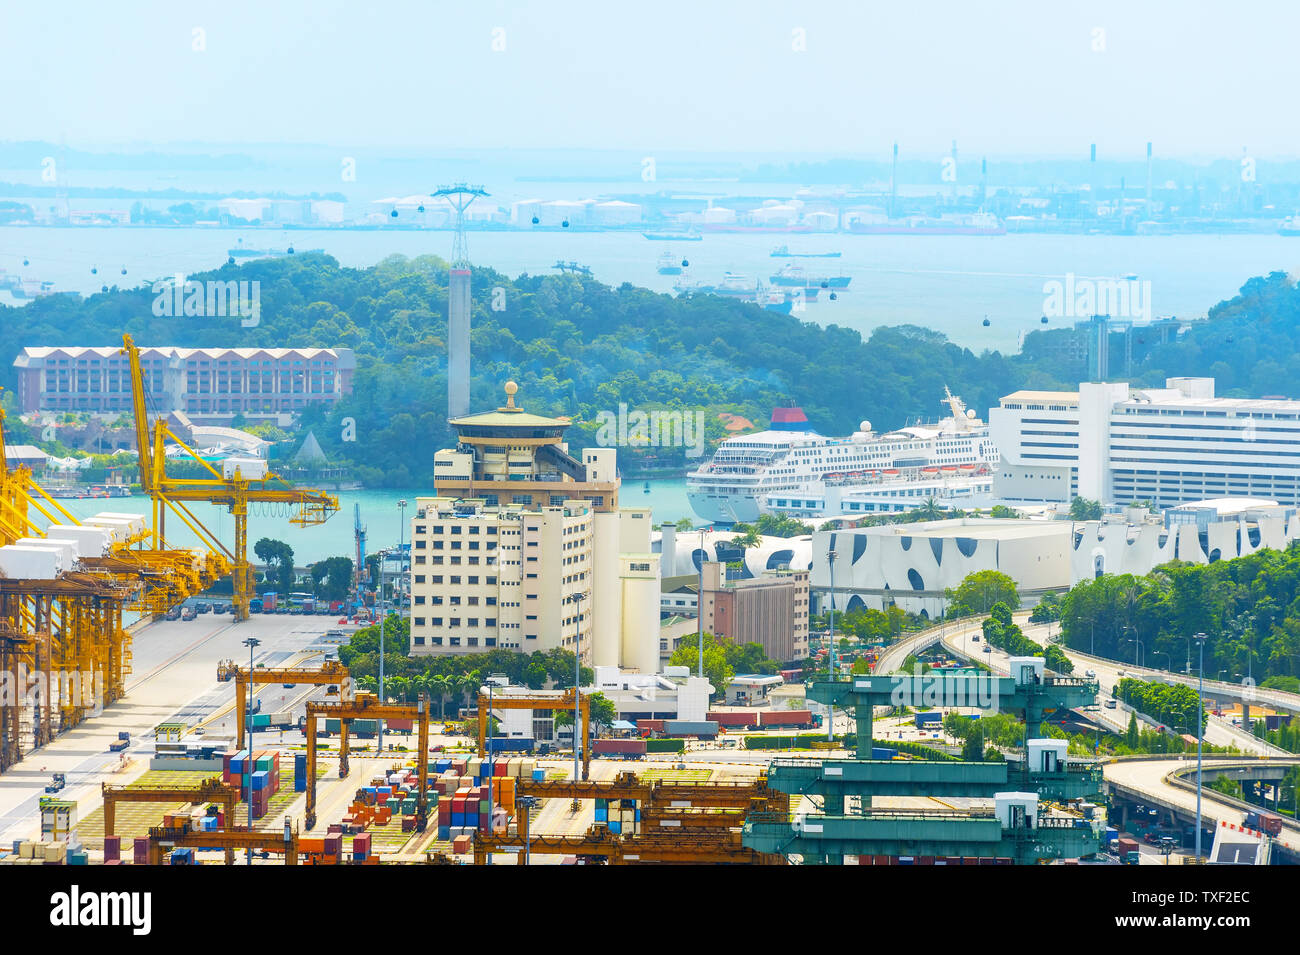 Aerial view of Singapore port, cruise ship and Sentosa island. Singapore Stock Photo